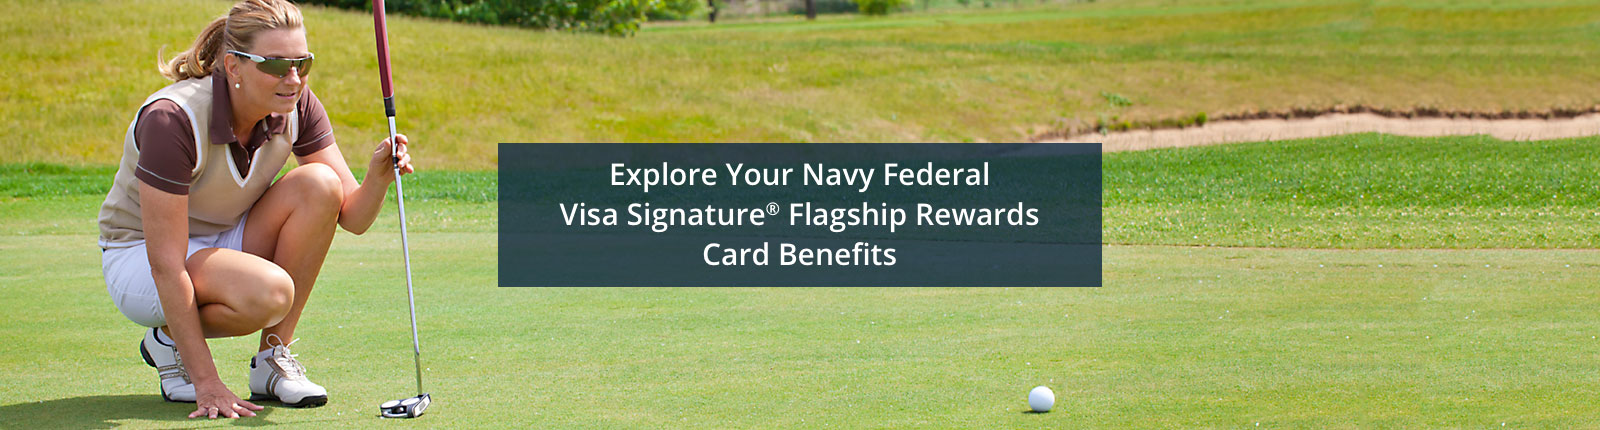 Explore Your Navy Federal Visa Signature Flagship Rewards Card Benefits